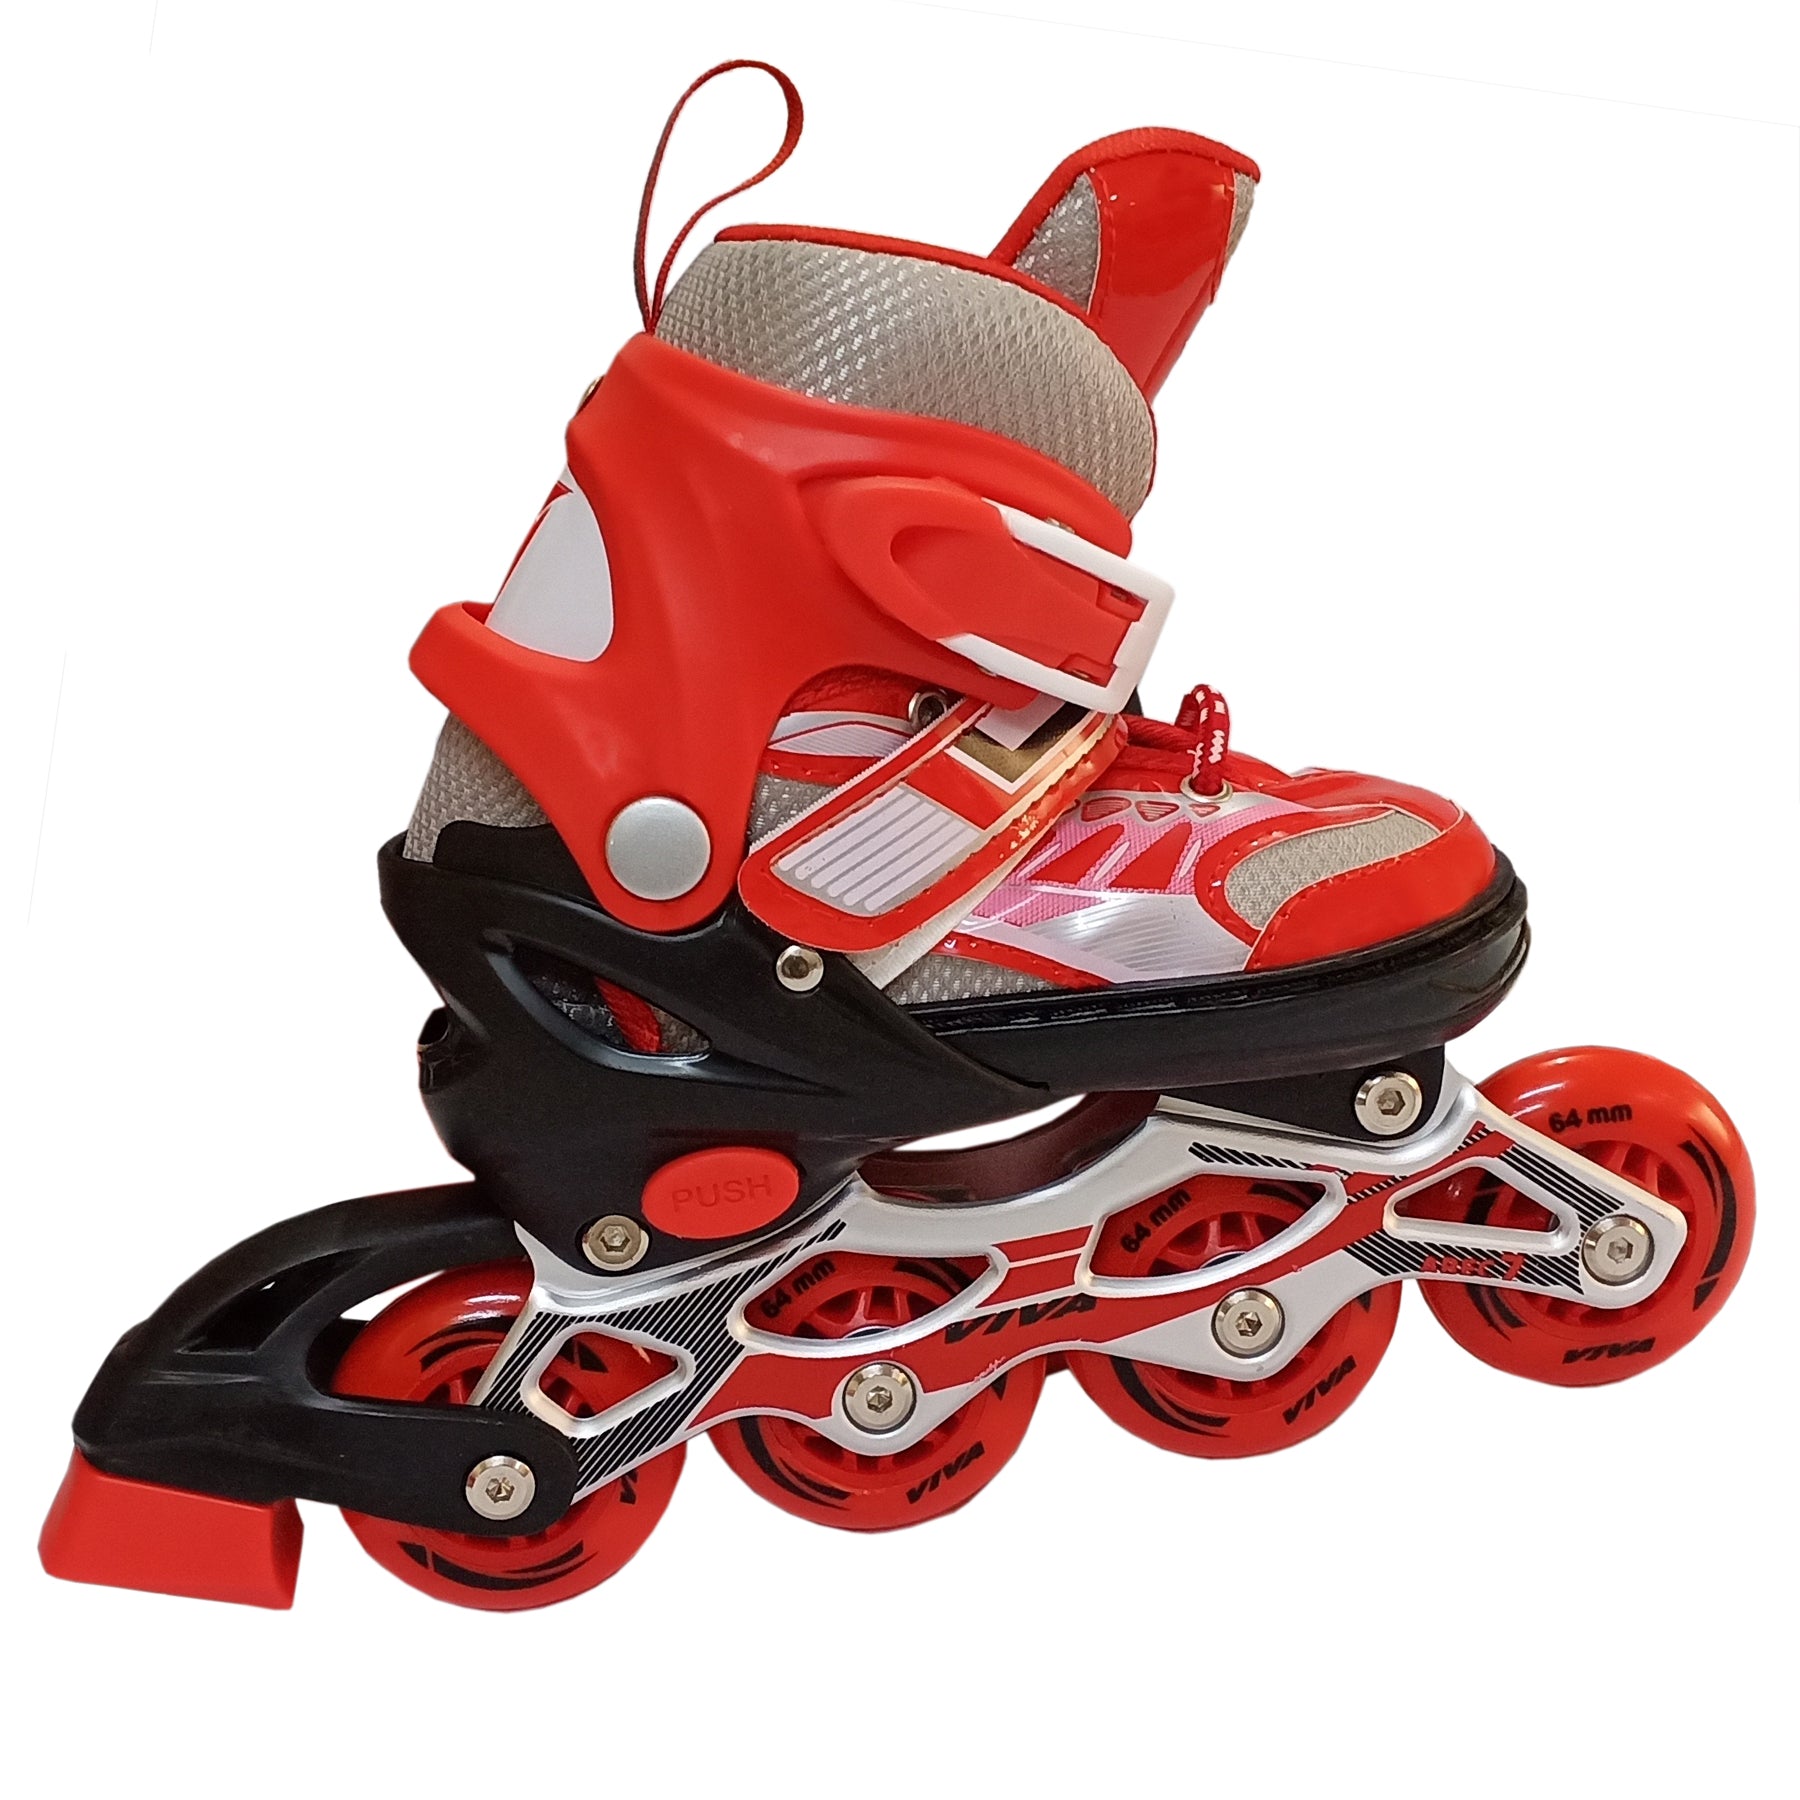 Viva Professional Inline Skates - Red (68 mm wheels) - Best Price online Prokicksports.com